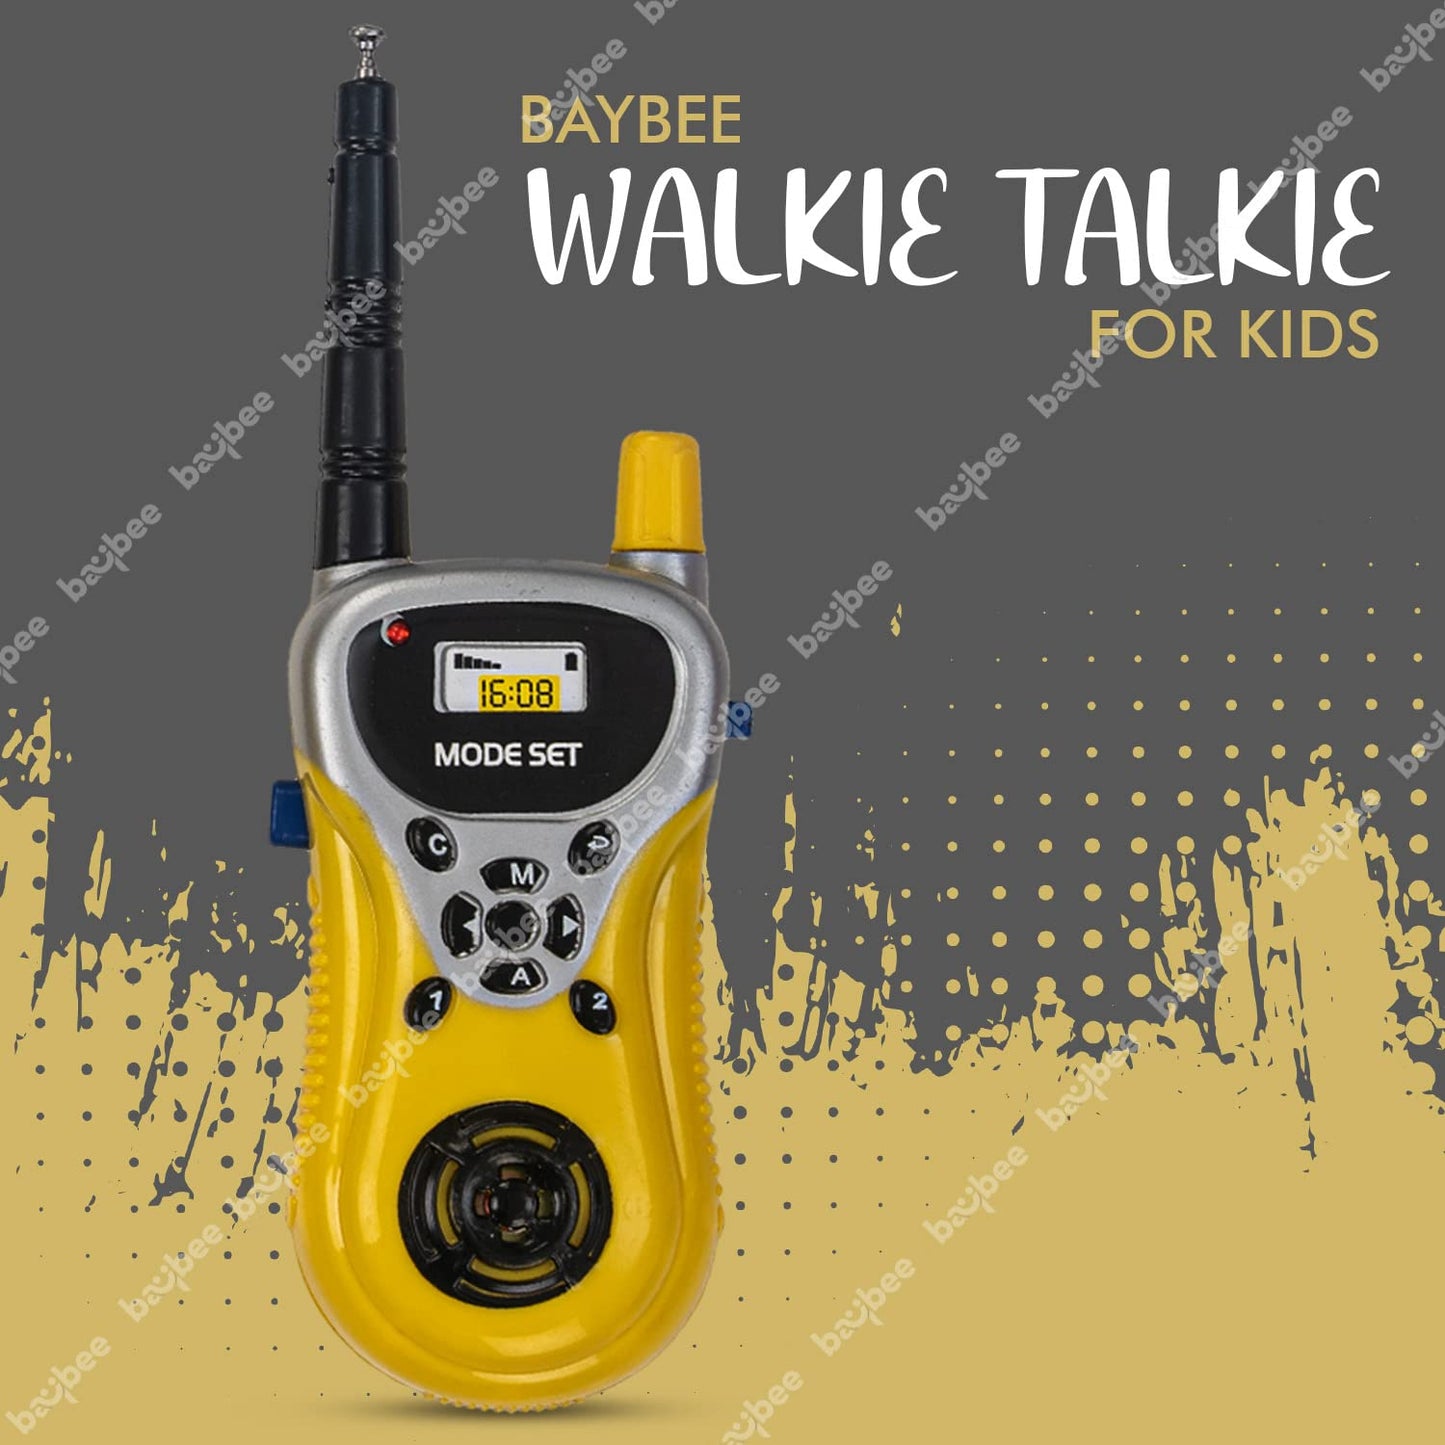 Baybee Long Range Two Way Radio Walkie Talkie Toy with Mic, Speaker & Antenna for Kids